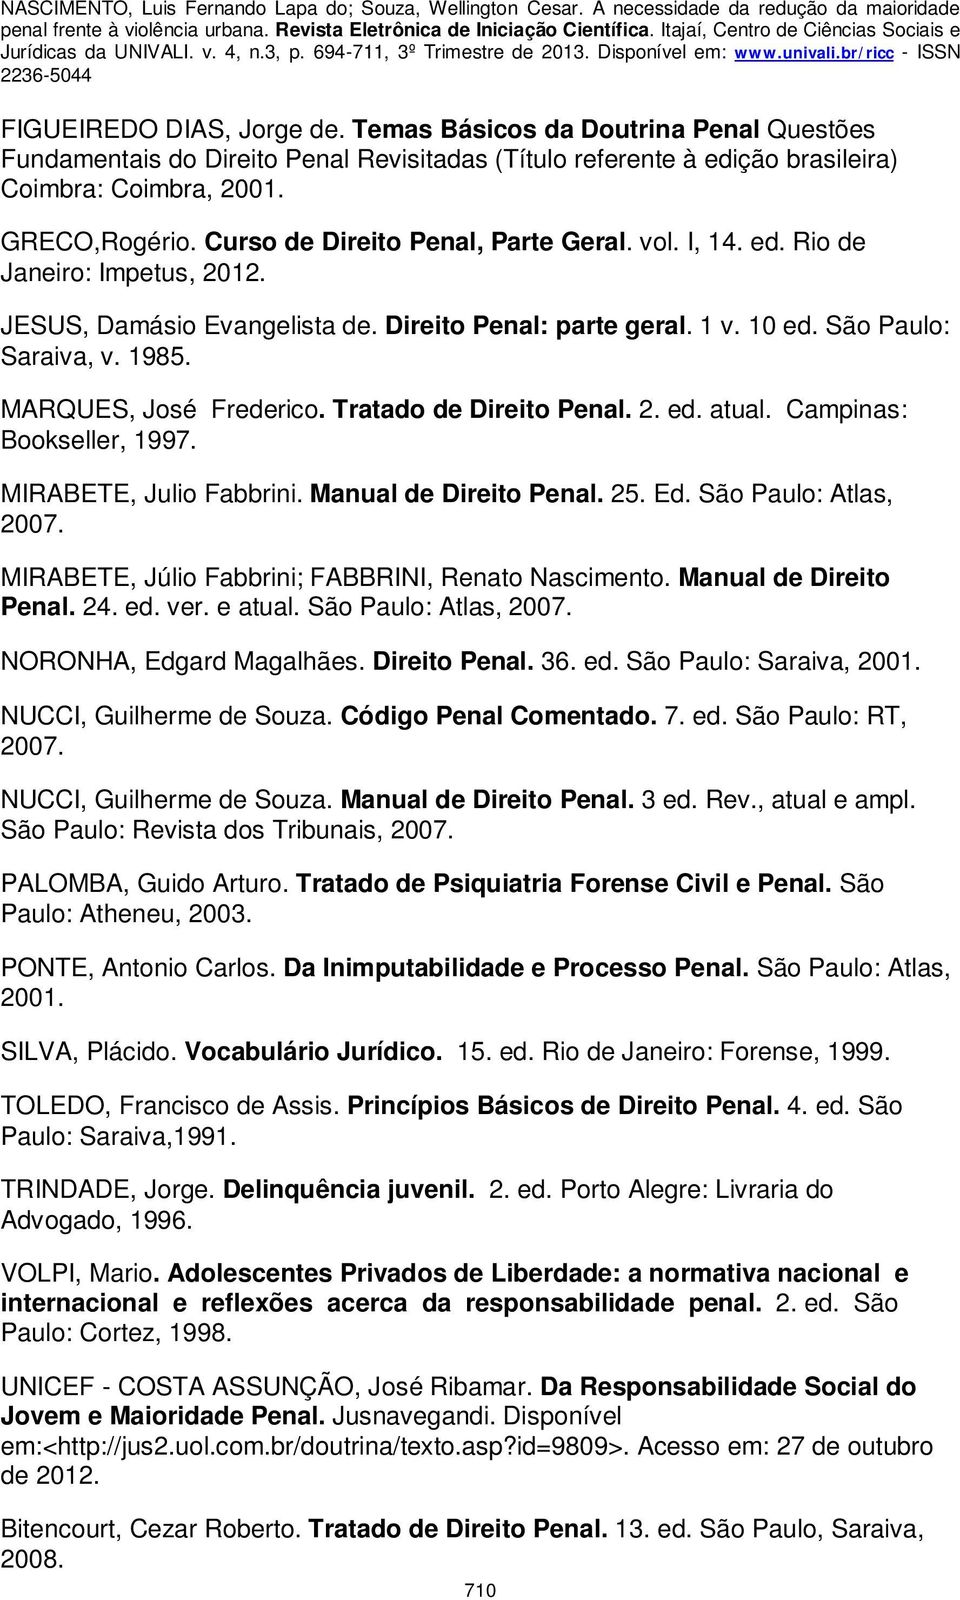 MARQUES, José Frederico. Tratado de Direito Penal. 2. ed. atual. Campinas: Bookseller, 1997. MIRABETE, Julio Fabbrini. Manual de Direito Penal. 25. Ed. São Paulo: Atlas, 2007.